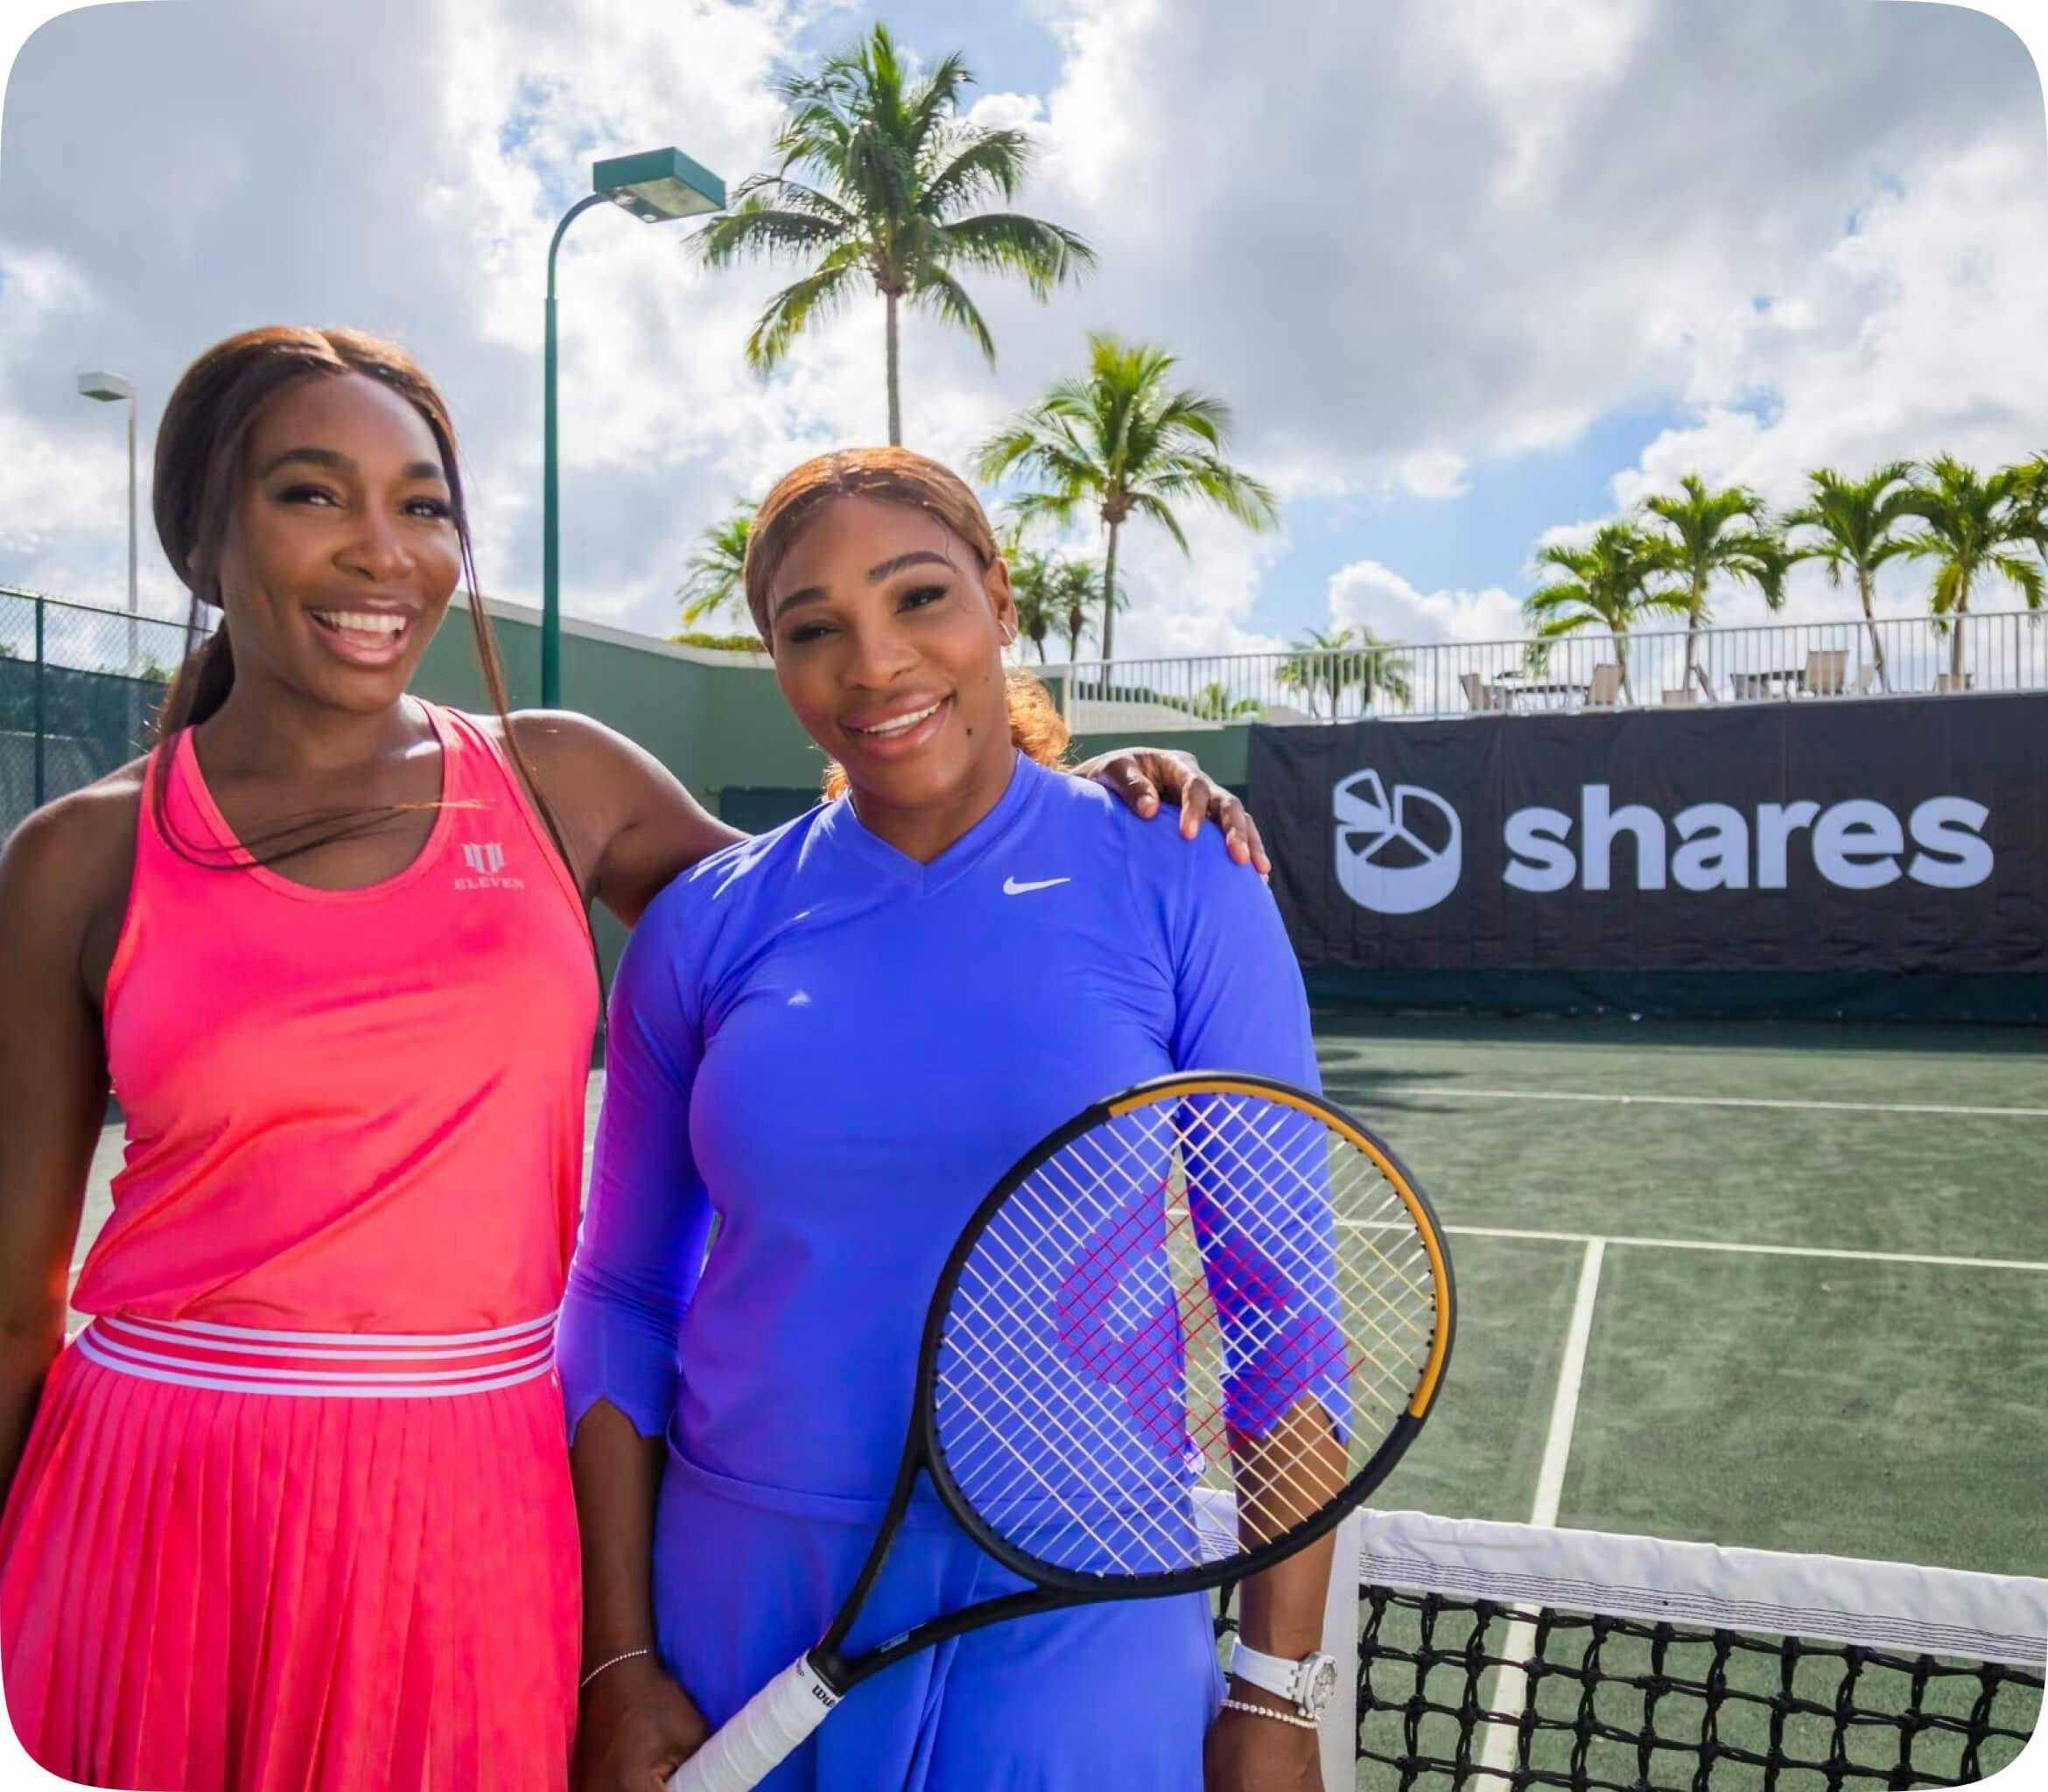 Serena and Venus Williams, Shares Ambassadors